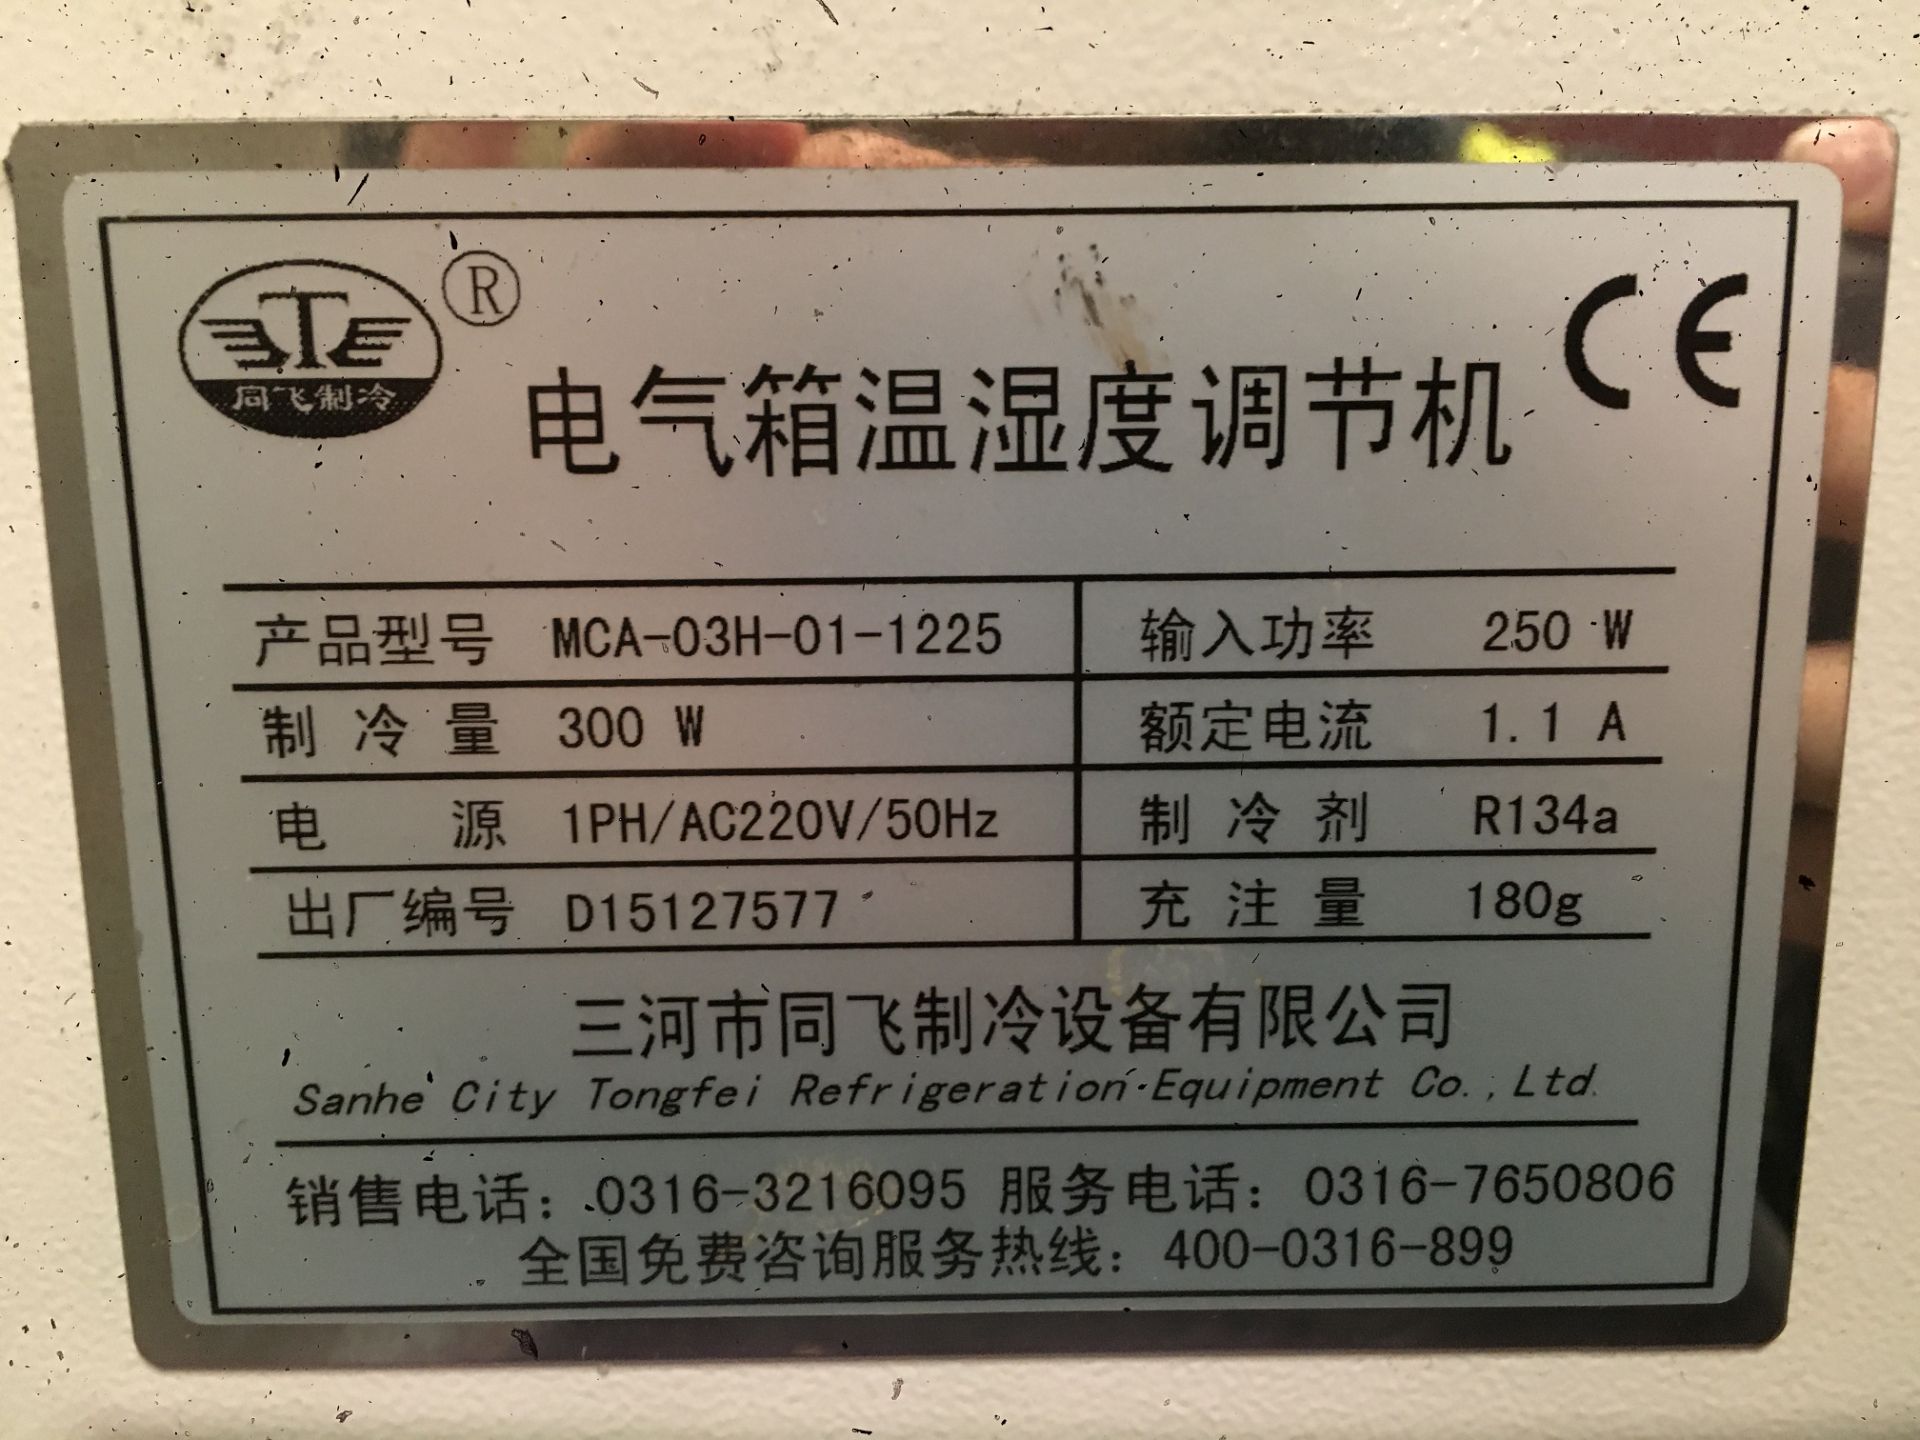 Suzhou Quick Laser Technology Co. Ltd, QL-FCP3015 20kw laser cutting machine, Serial No. - Image 11 of 16